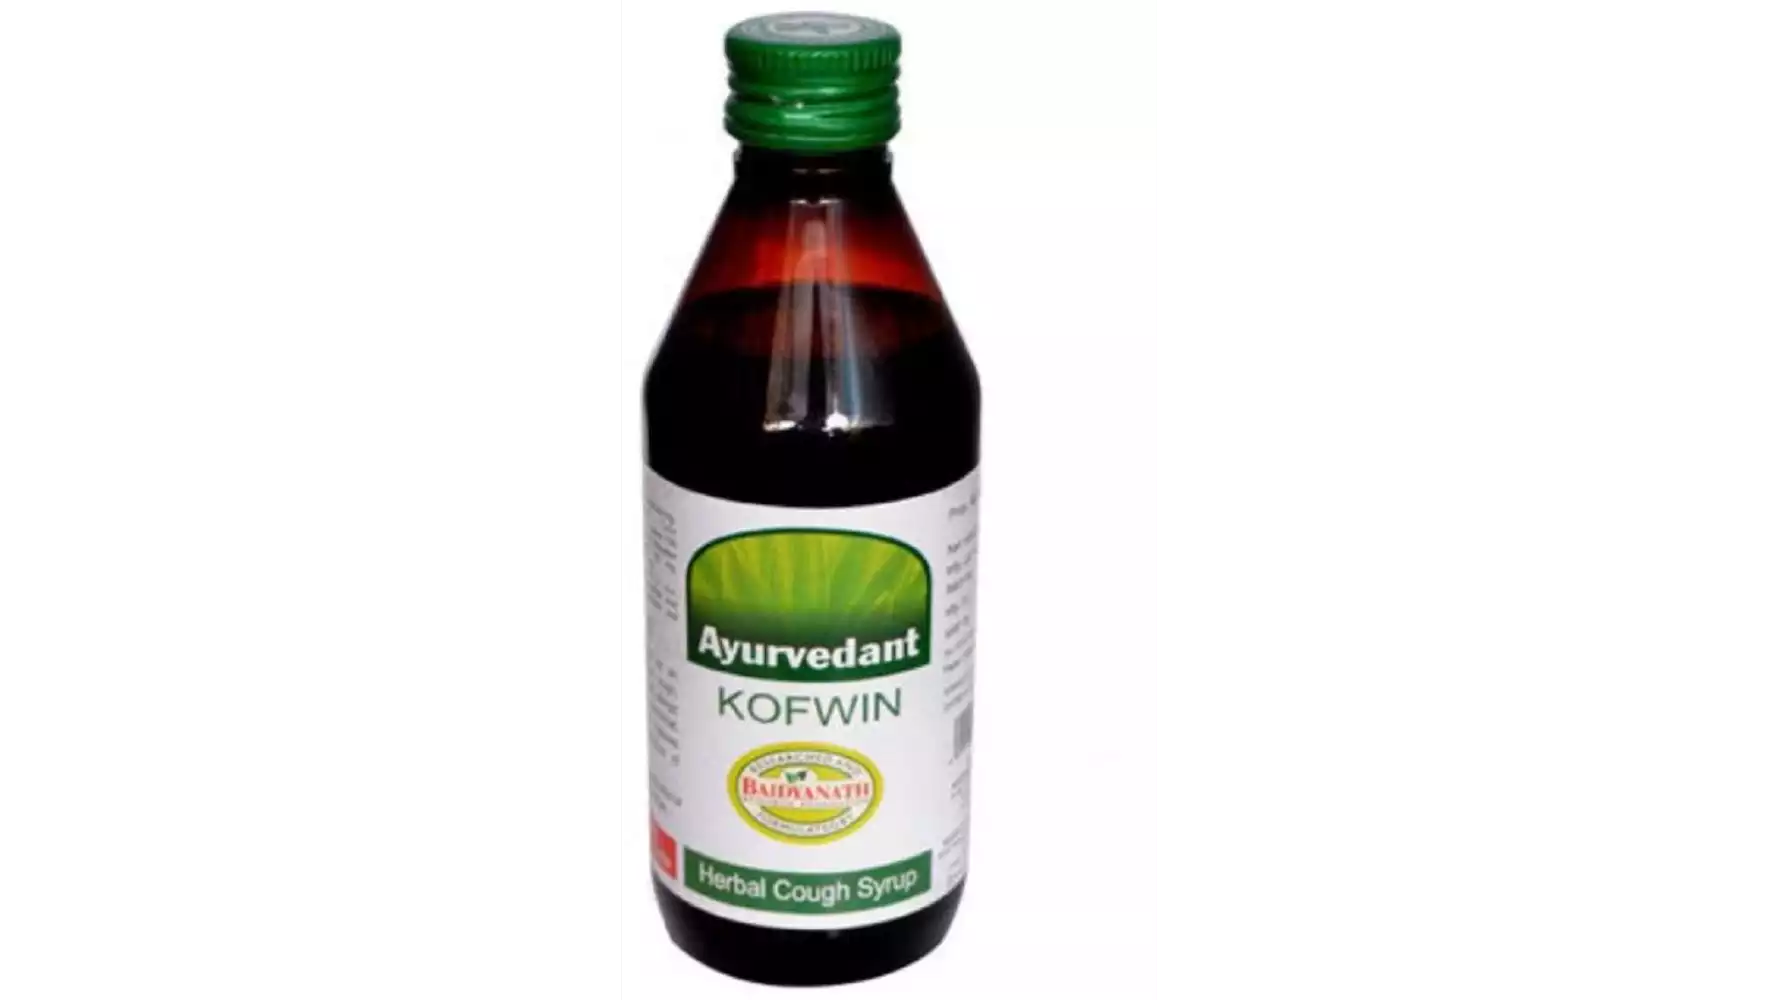 Baidyanath Ayurvedant Kofwin Syrup (200ml)